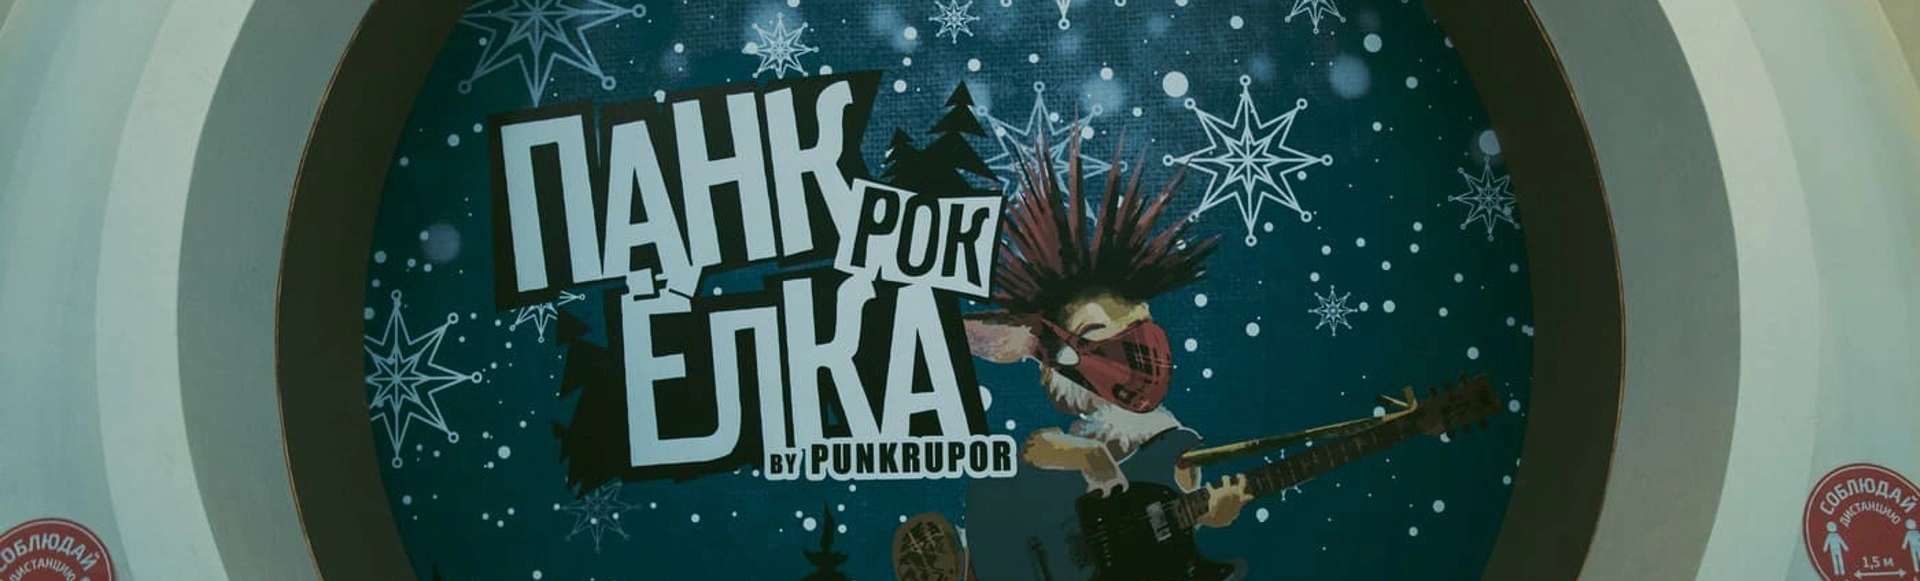 Панк-рок Ёлка by PunkRupor